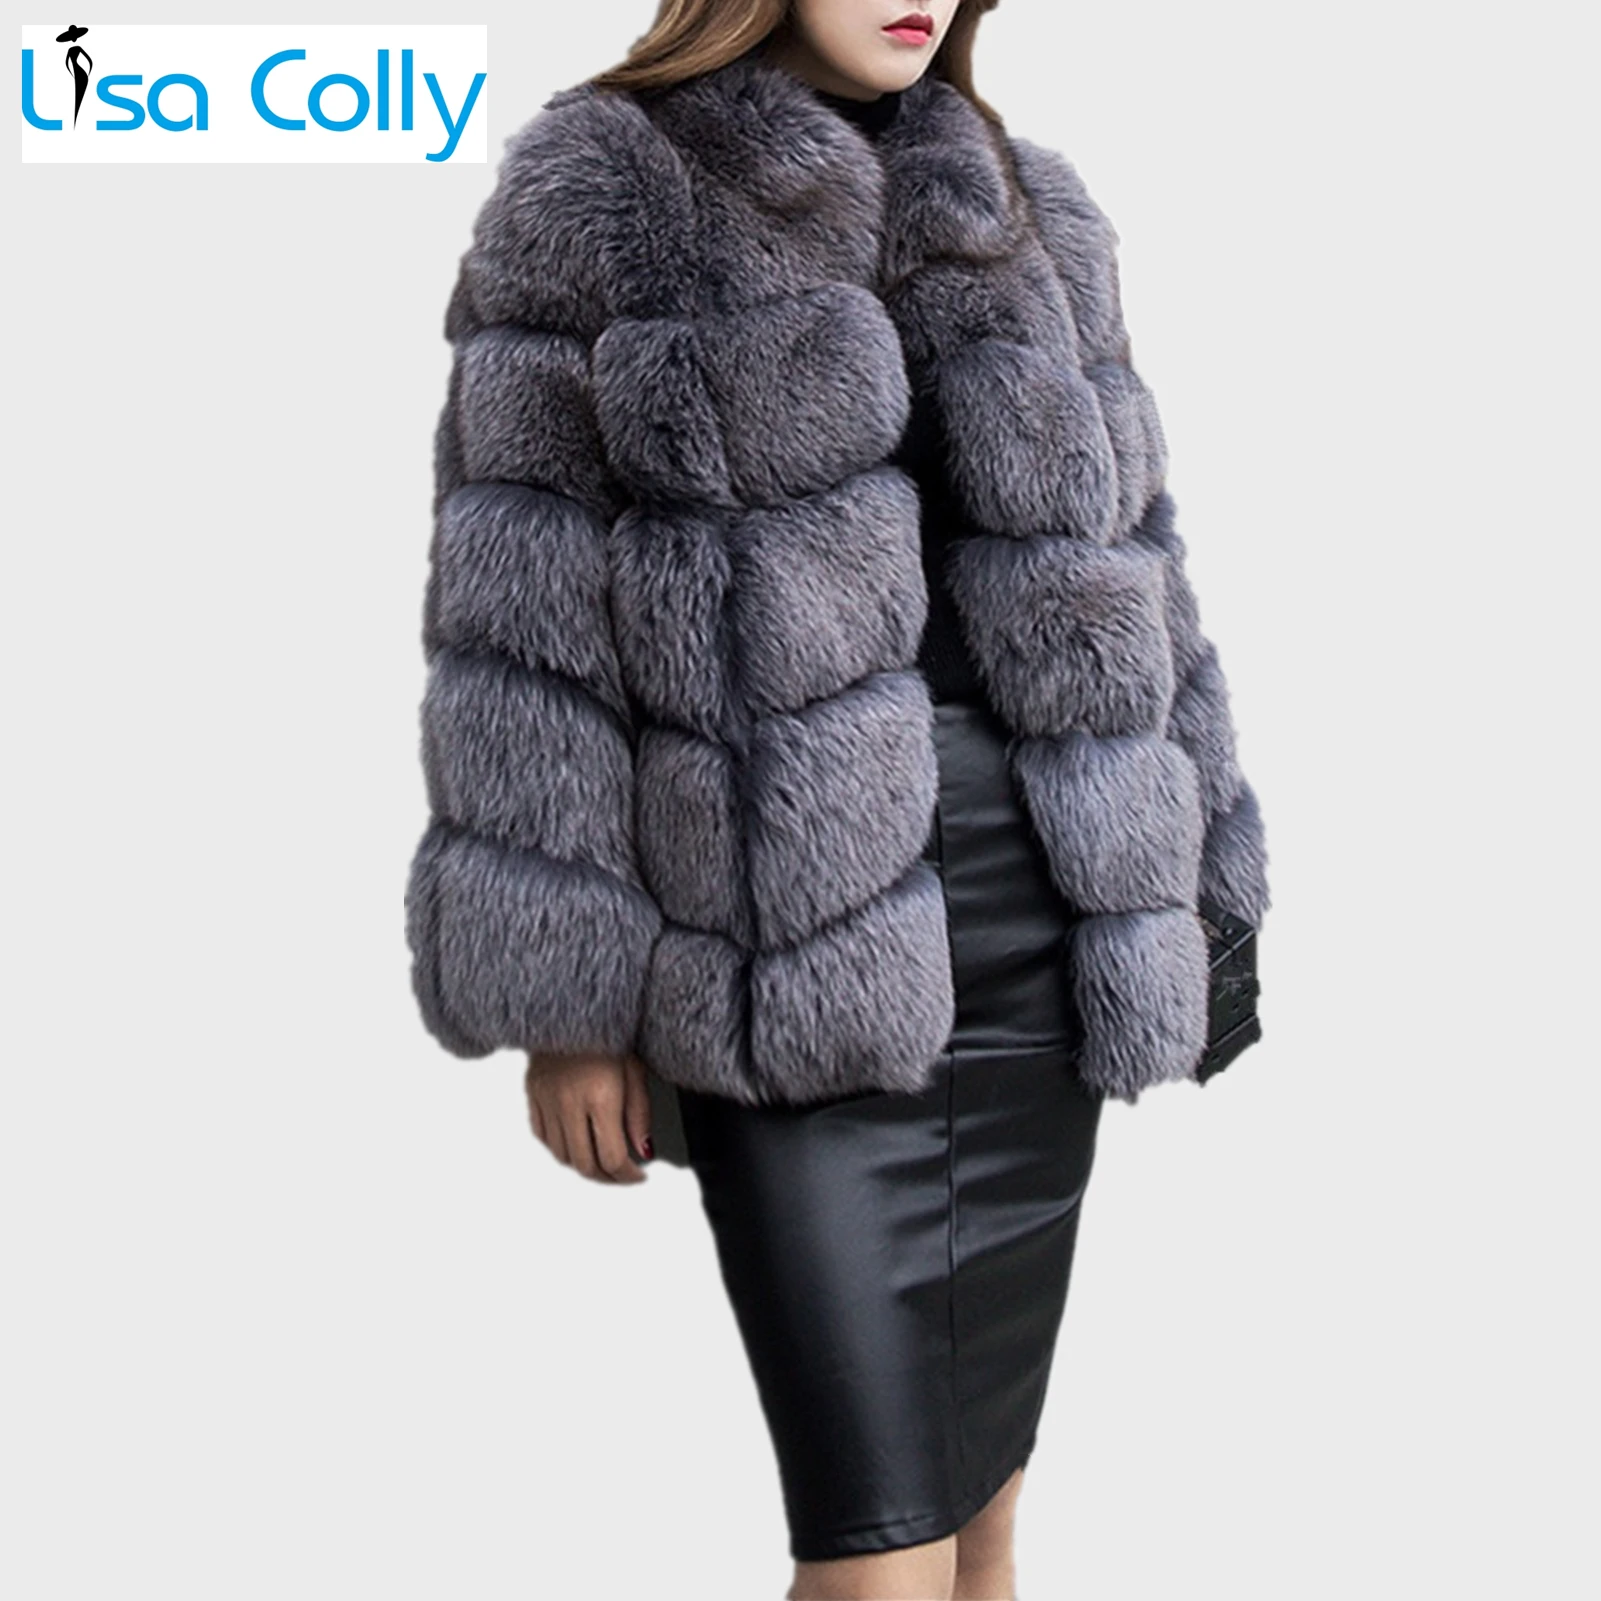 Lisa Colly Furs Coat Winter Coats Women Casual Loose Fur Jacket Coat Overcoats Fashion Thicken Faux Fur Coats Outerwear